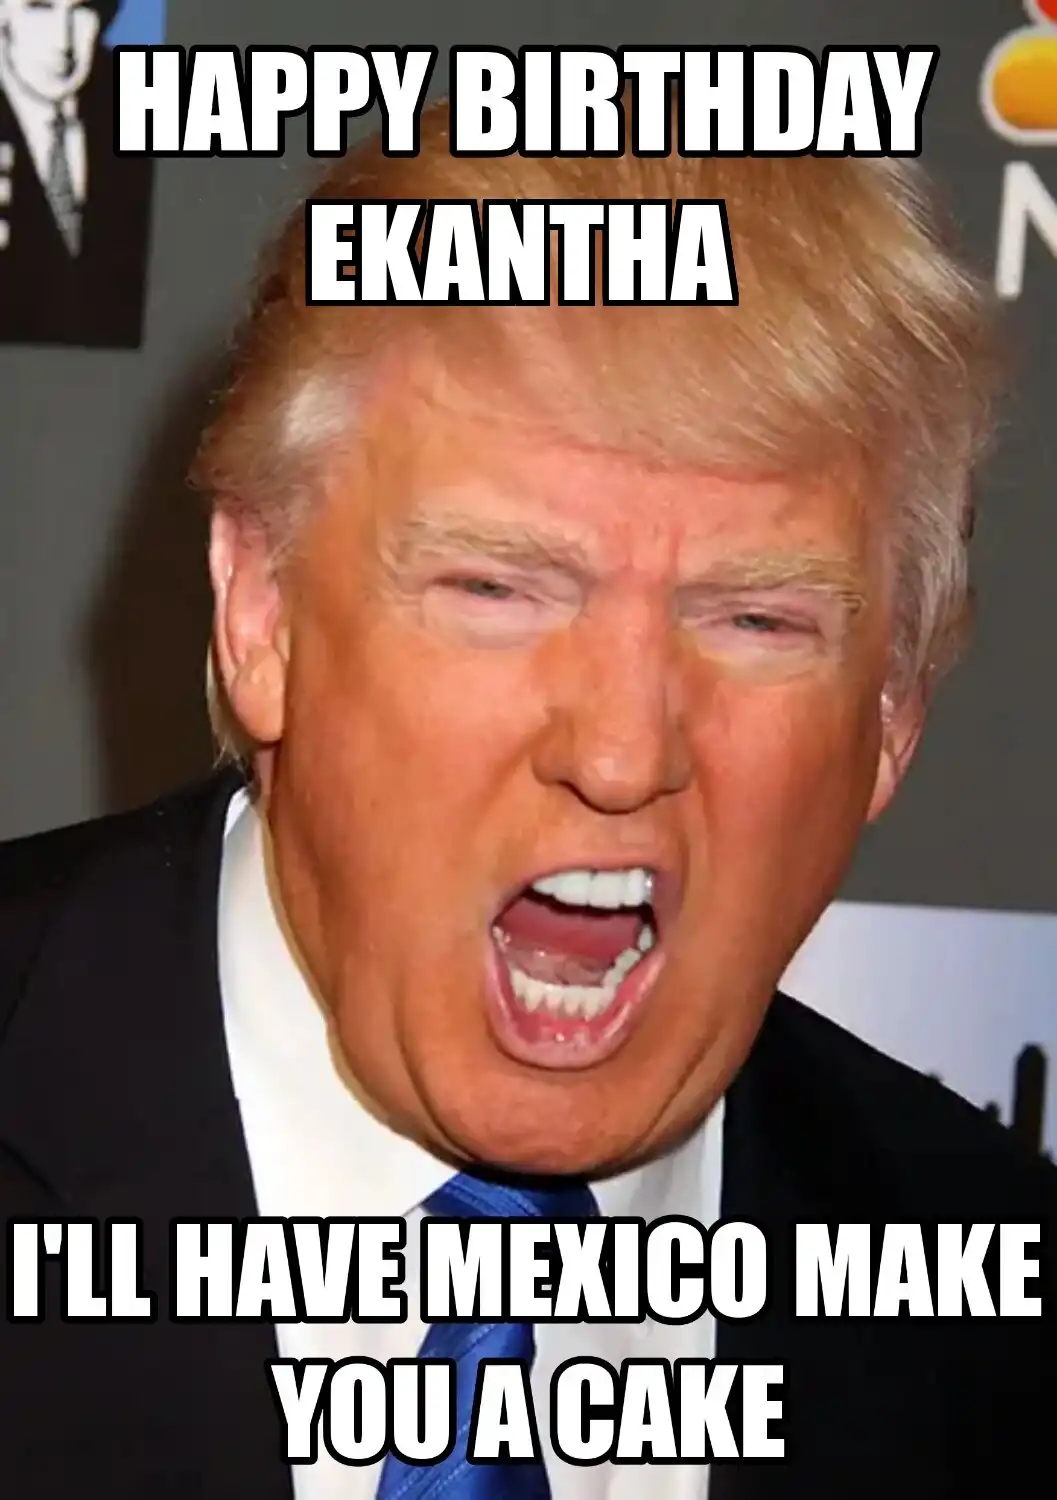 Happy Birthday Ekantha Mexico Make You A Cake Meme